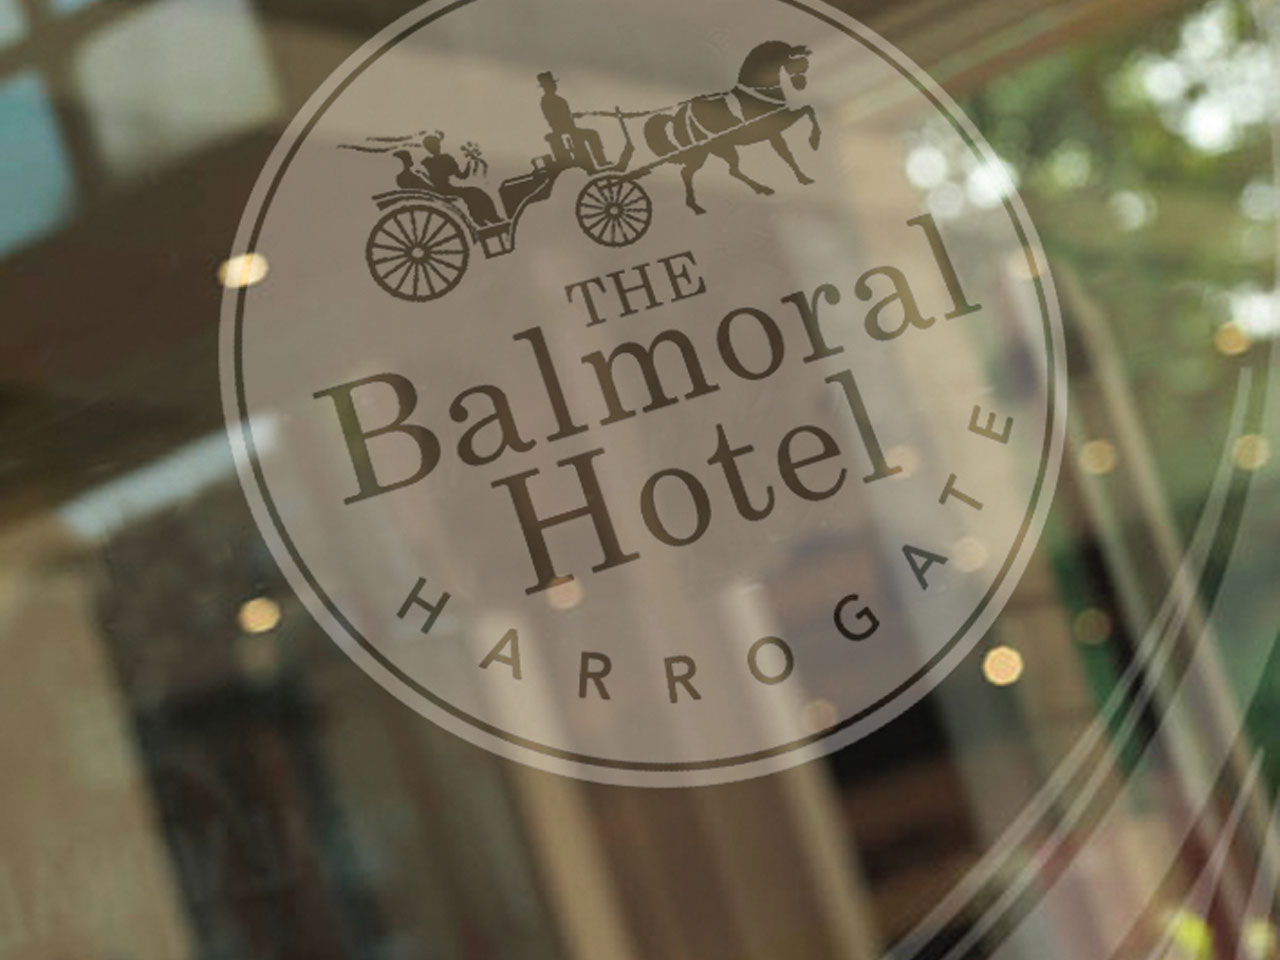 balmoral hotel marketing image